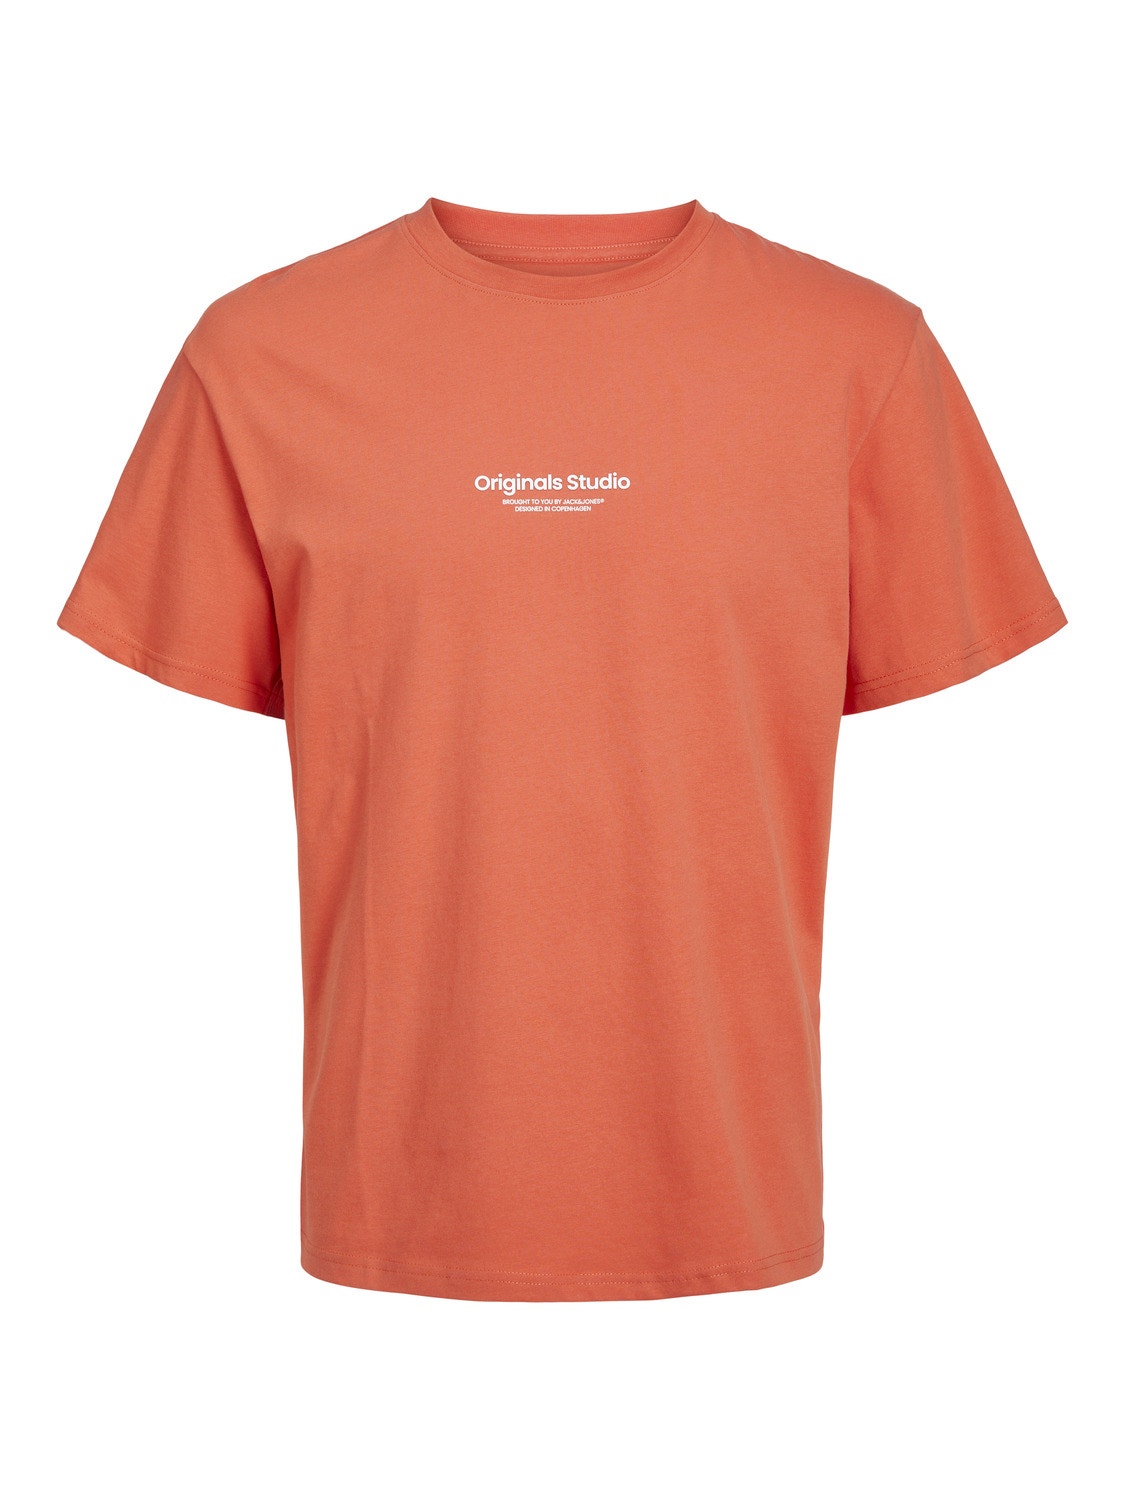 Jack & Jones Camiseta Estampado Cuello redondo -Ginger - 12240121